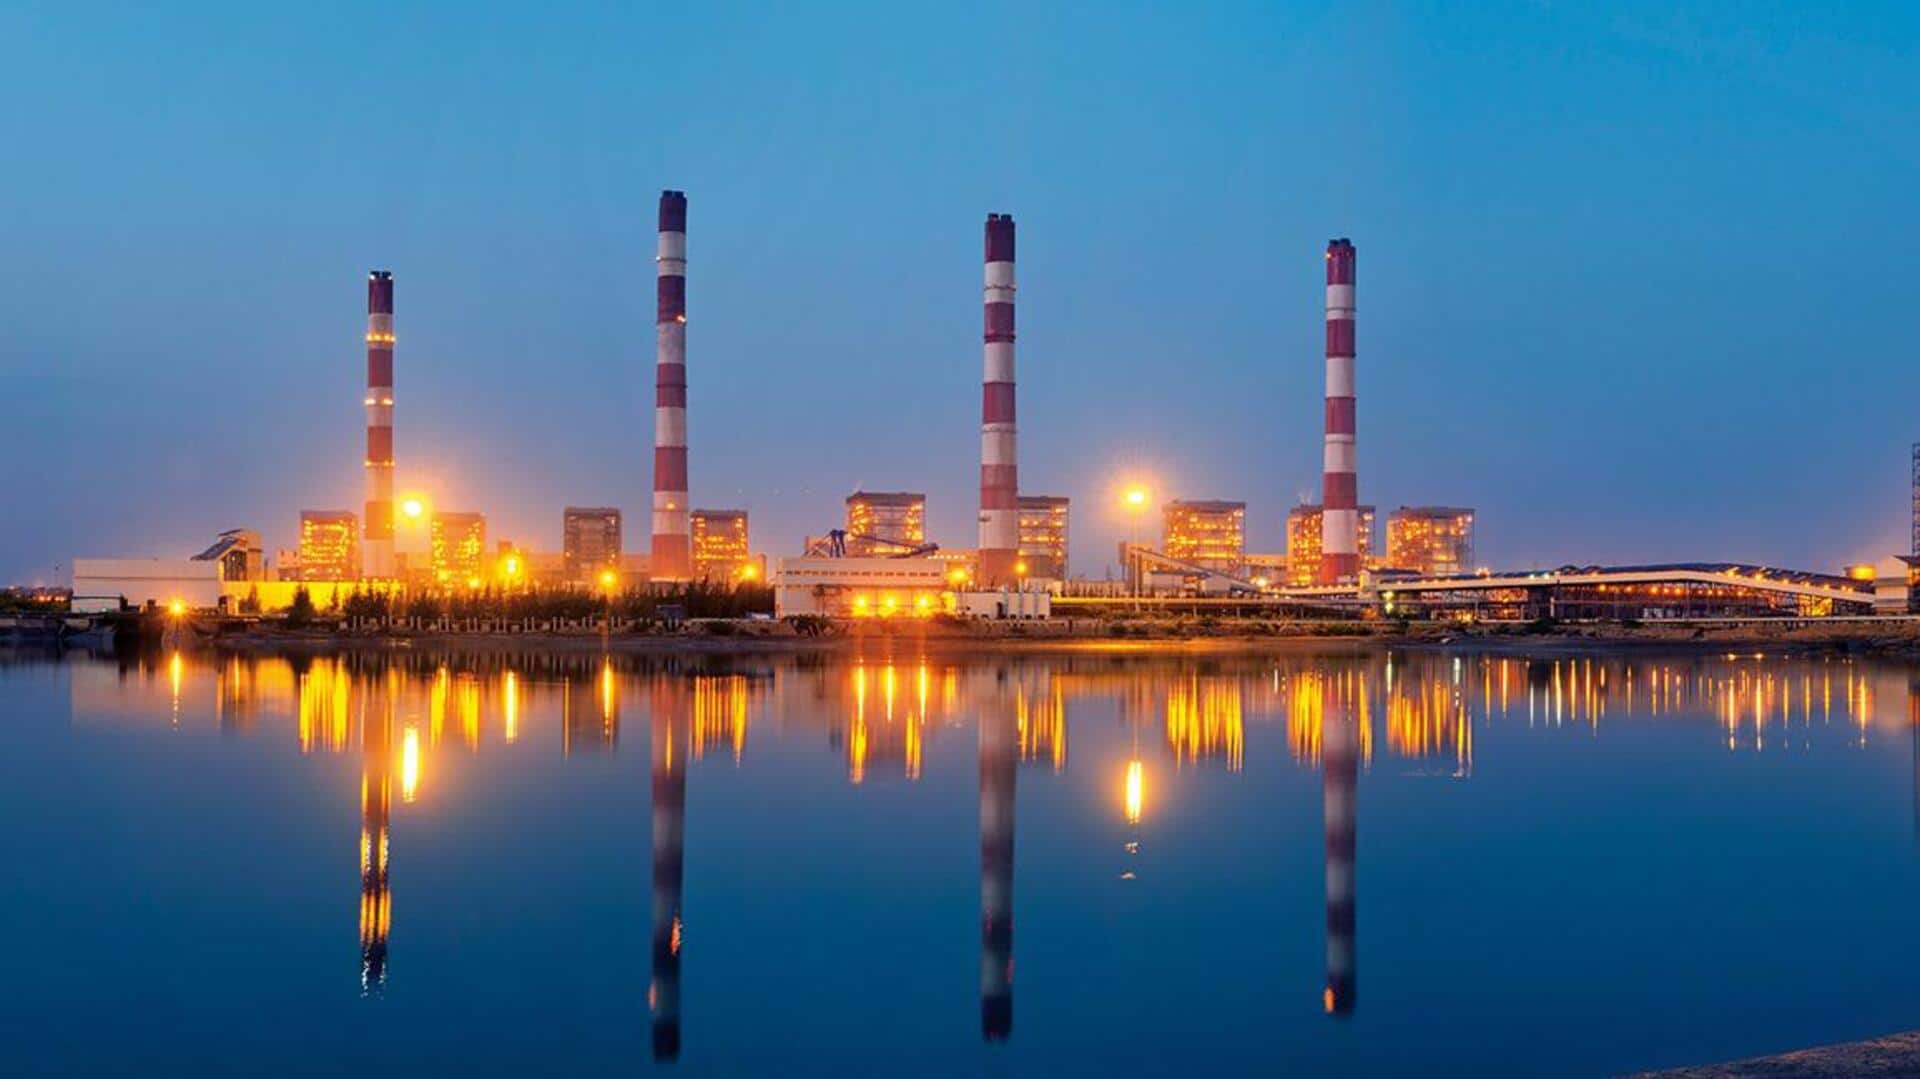 Adani Power's Q3 net profit soars to Rs. 2,738 crore